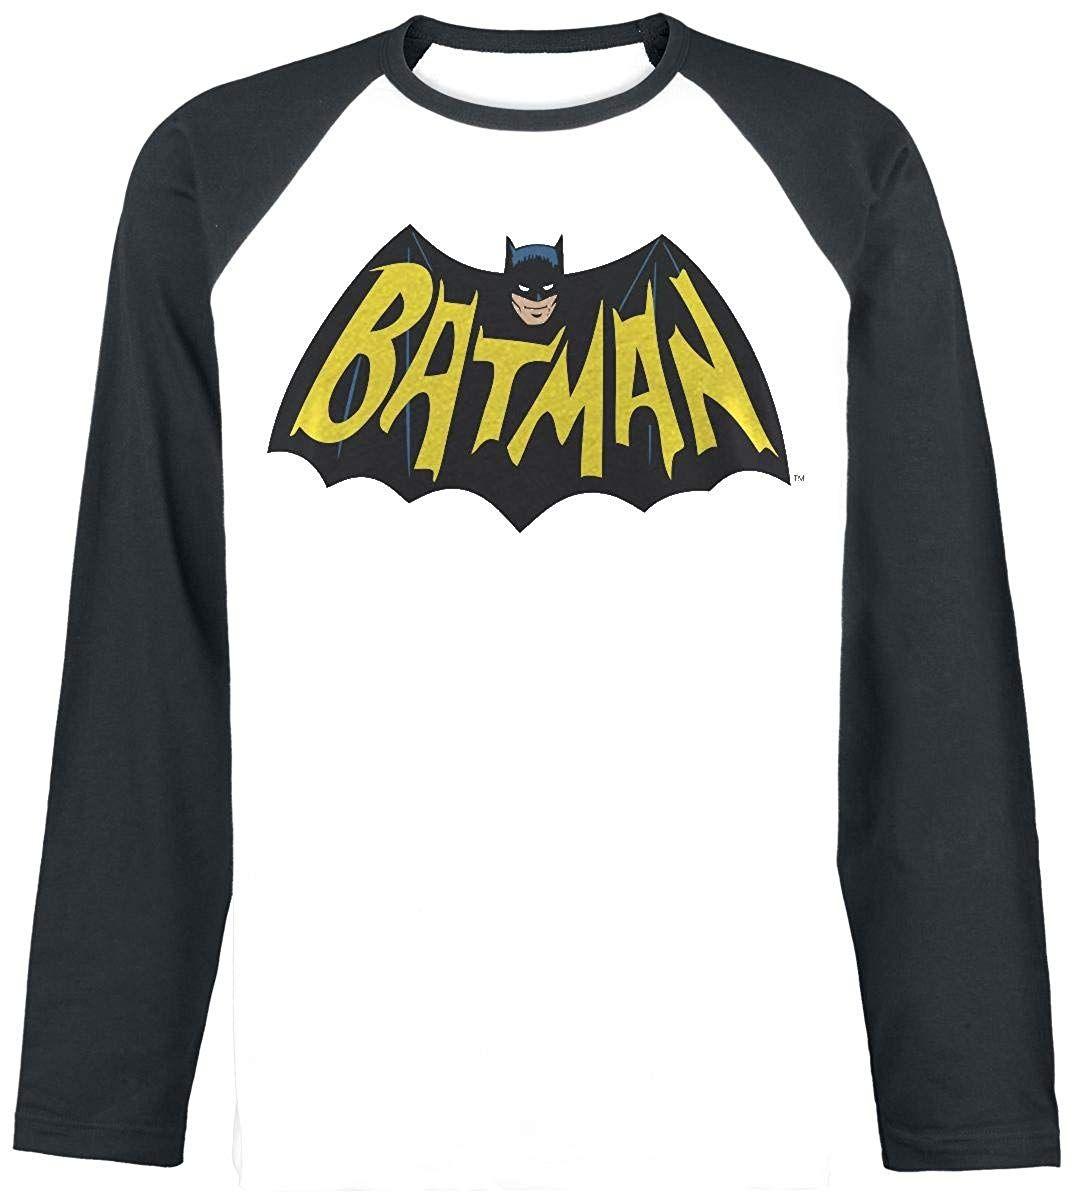 Batman 1966 Logo - Batman 1966 Logo Longsleeve White-Black XXL: Amazon.co.uk: Clothing